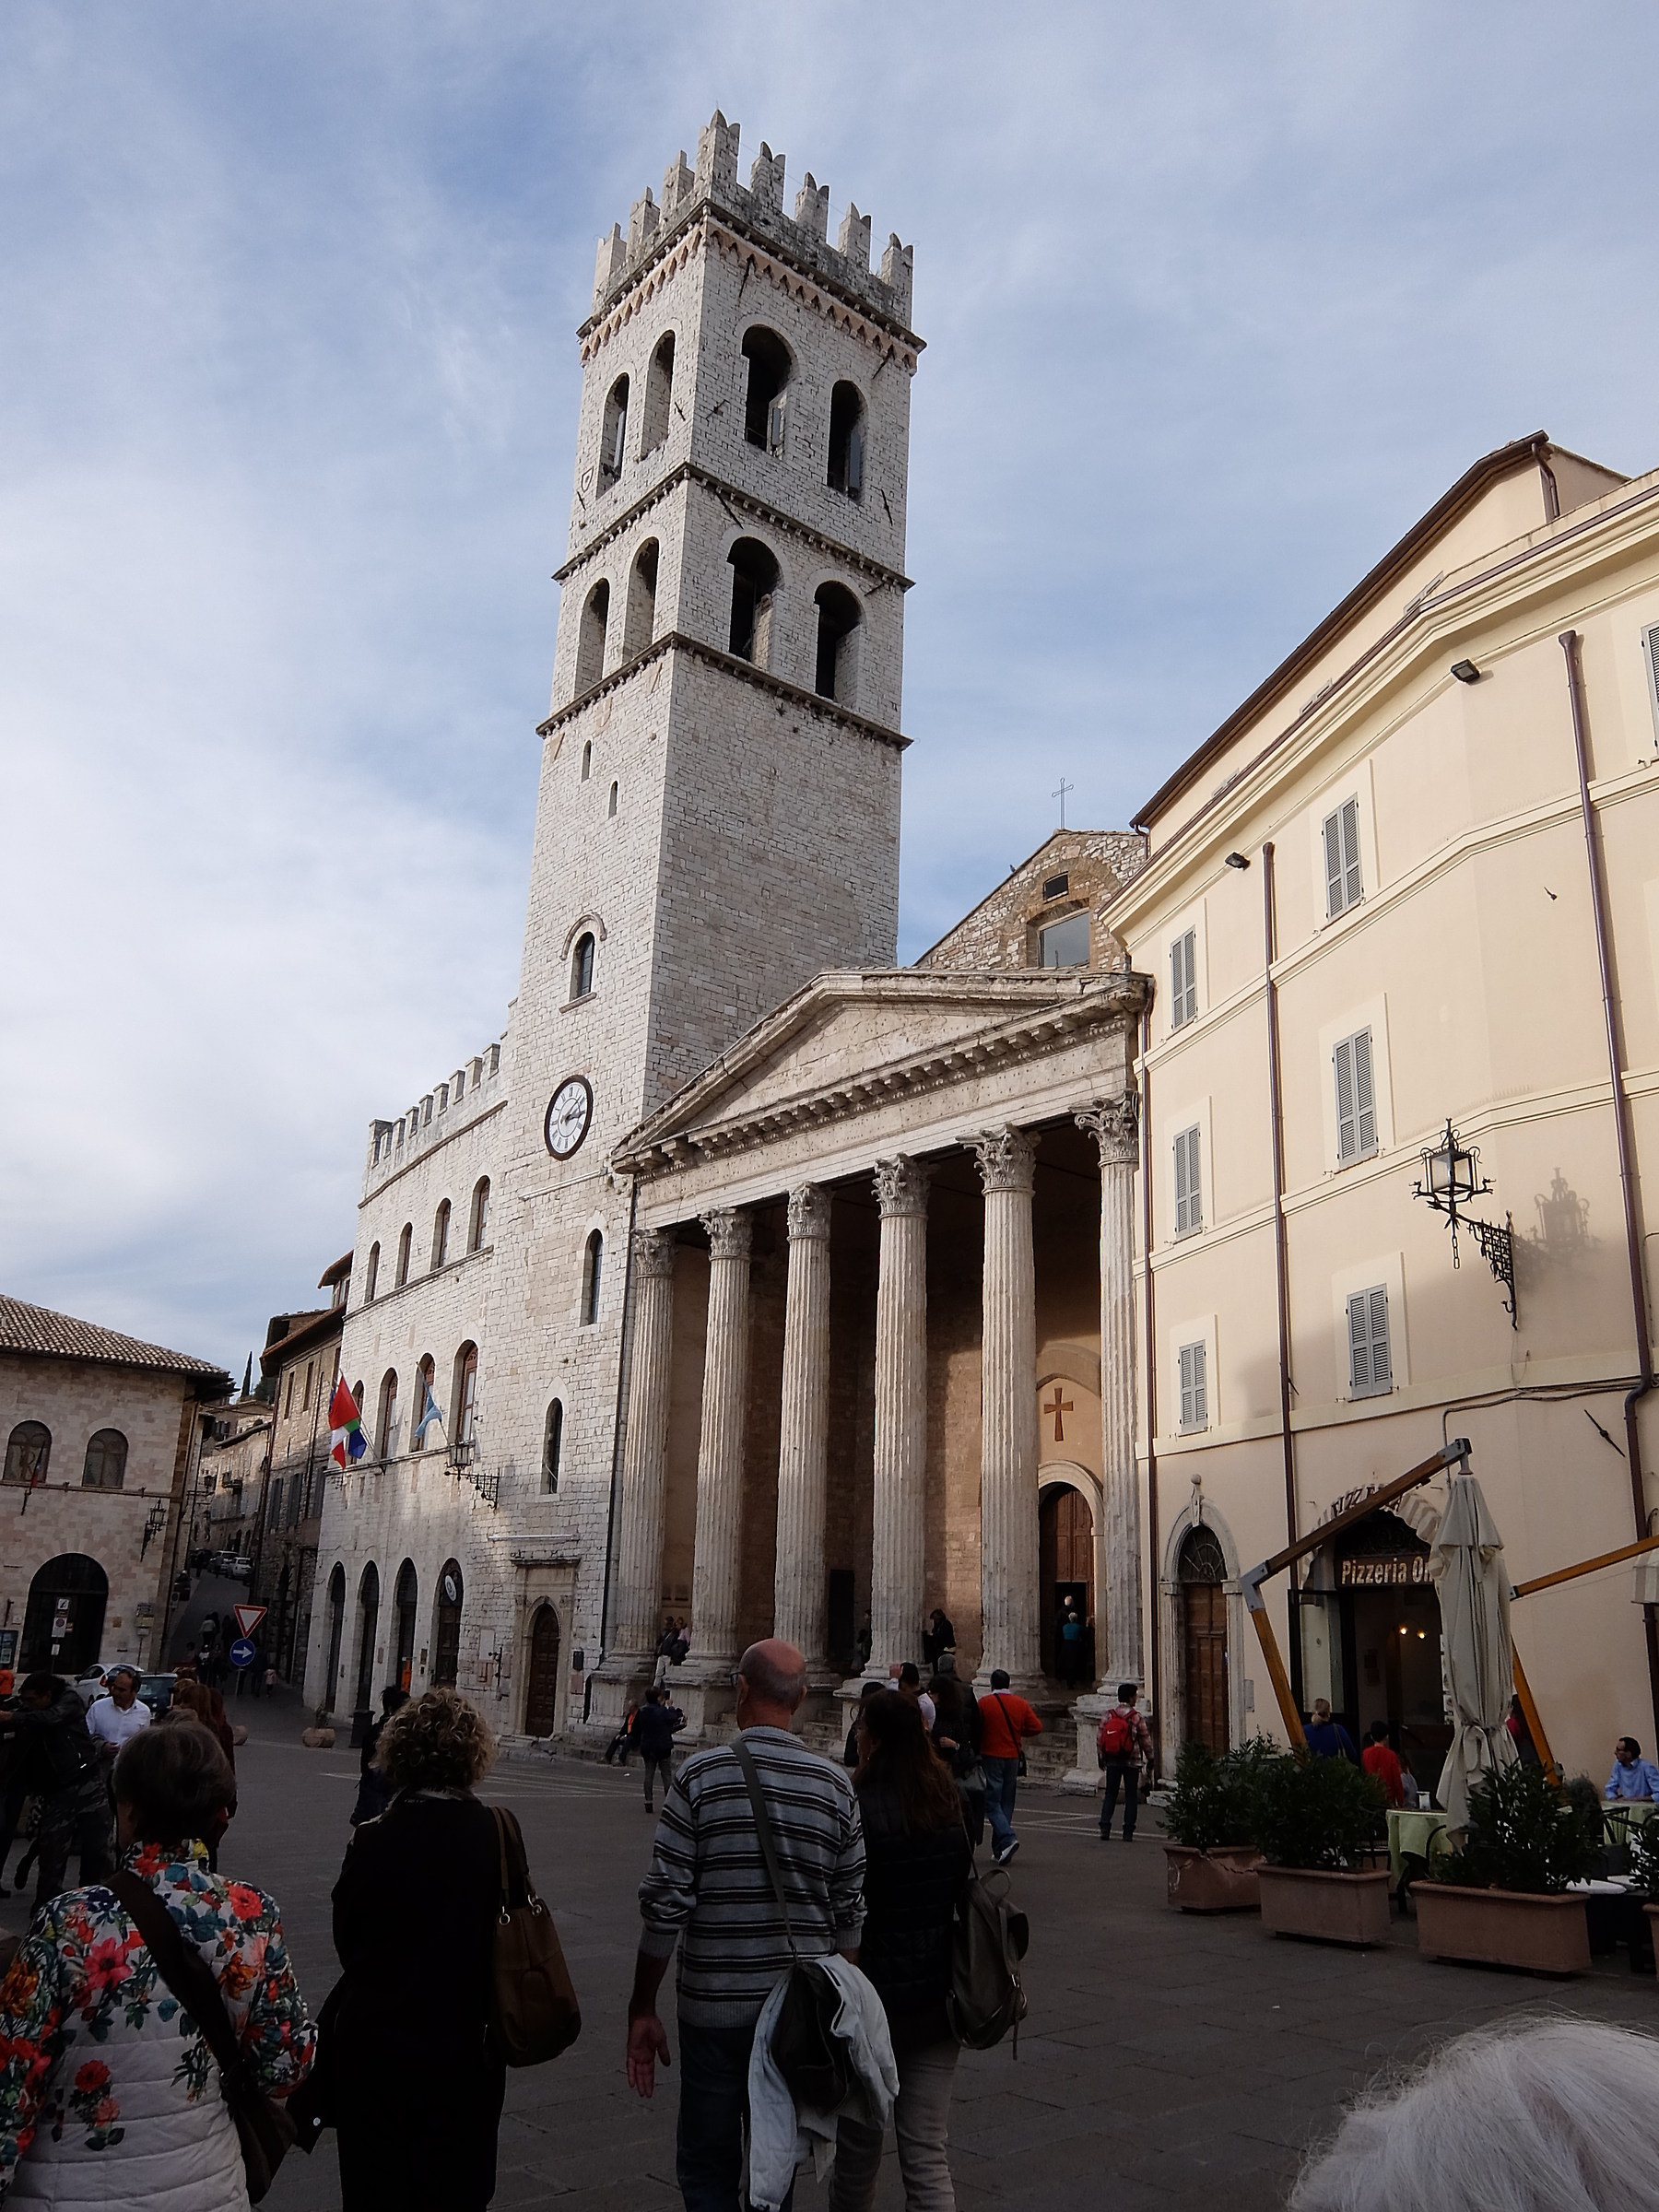 Urban visions of Assisi 2...